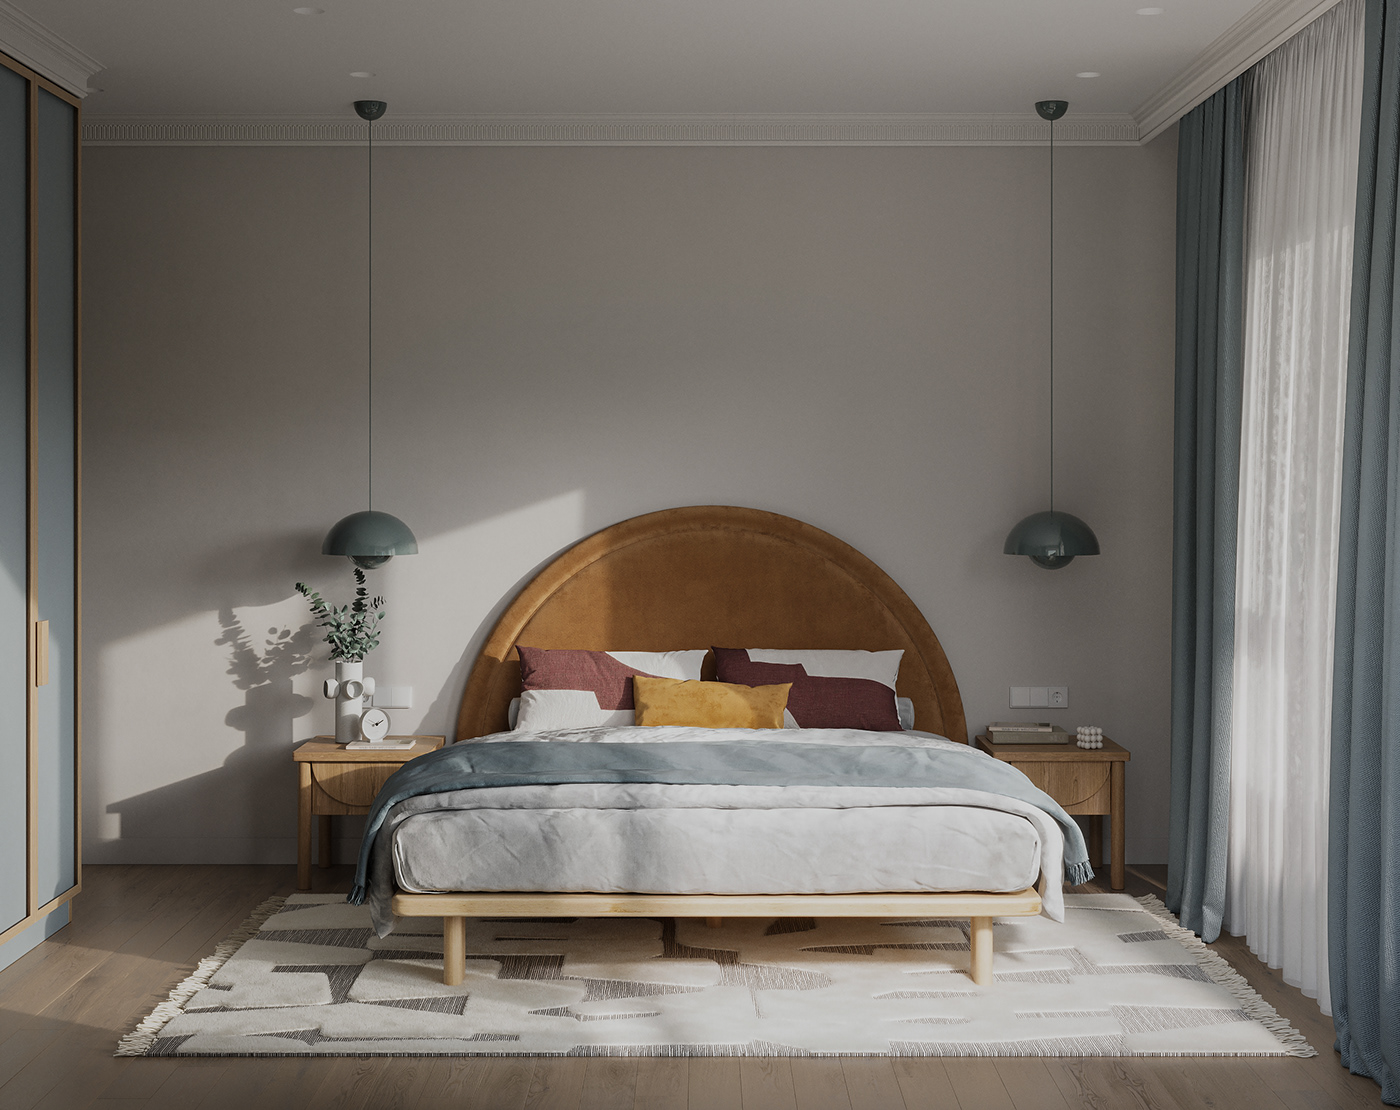 3ds max corona corona render  home house Interior interior design  interiordesign Render visualization